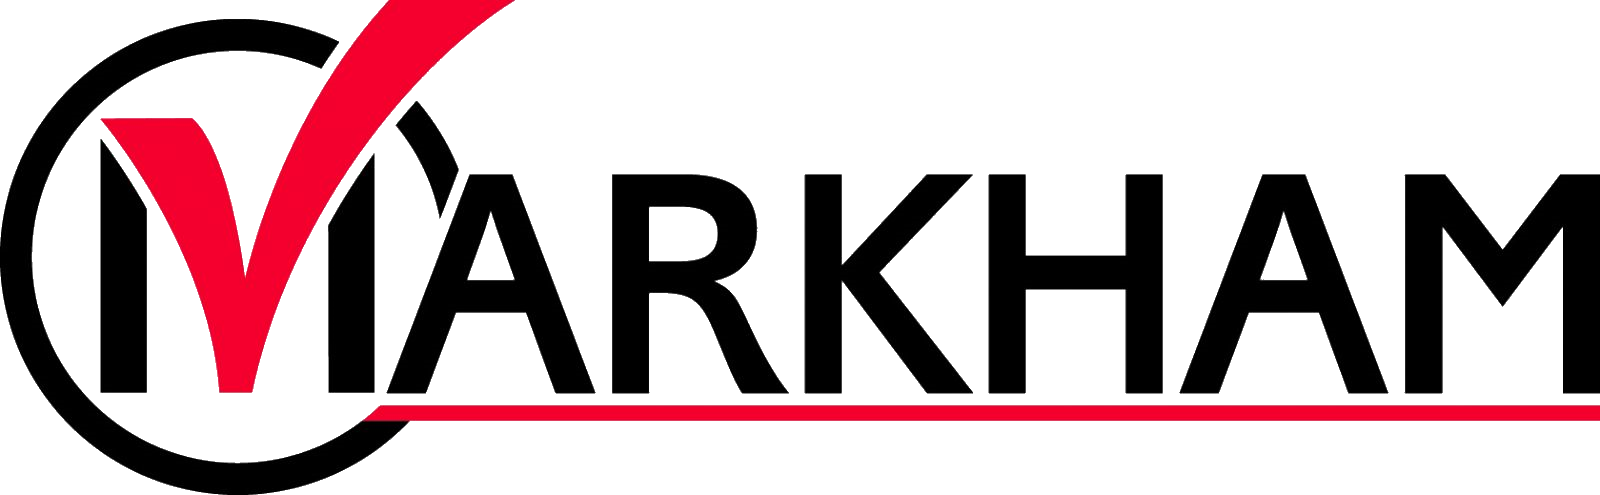 town of markham website logo